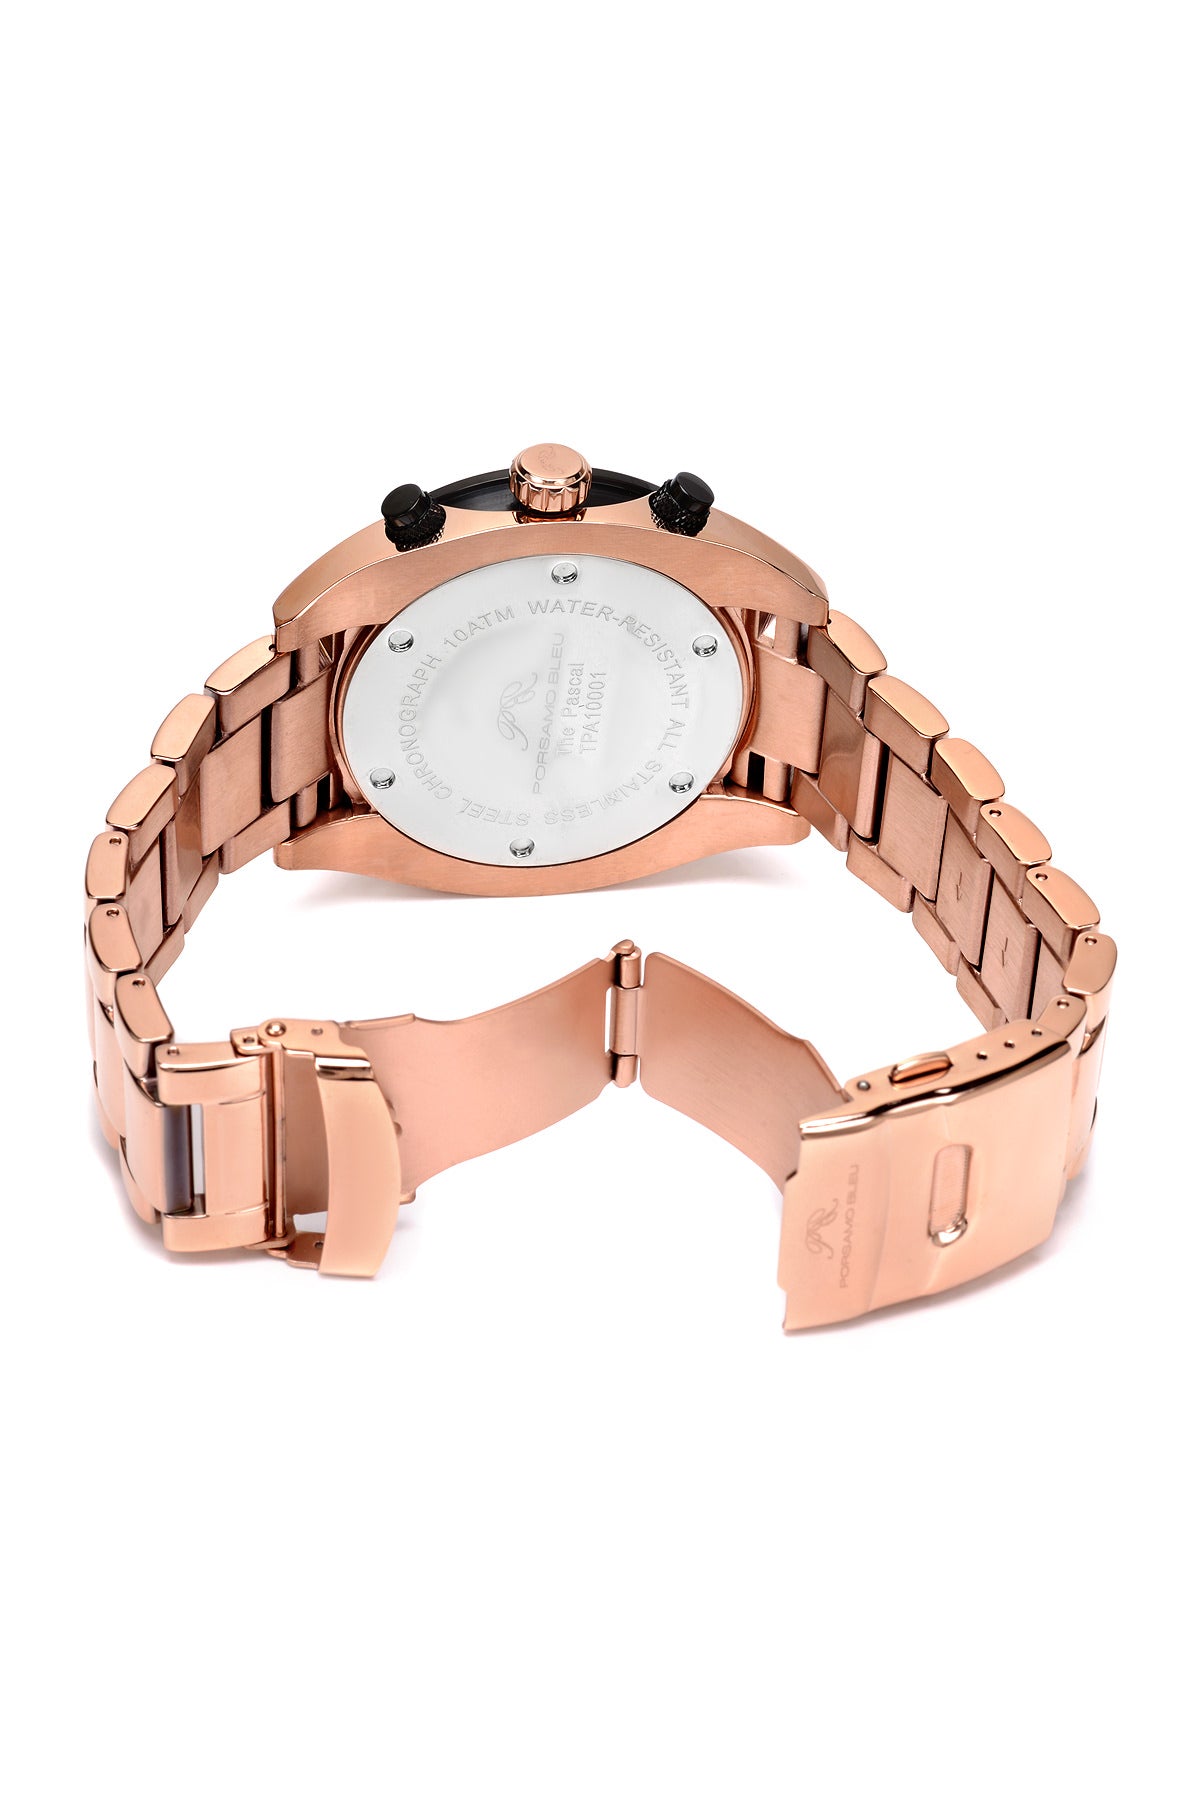 Porsamo Bleu Pascal luxury chronograph men's stainless steel watch, rose, black 262BPAS